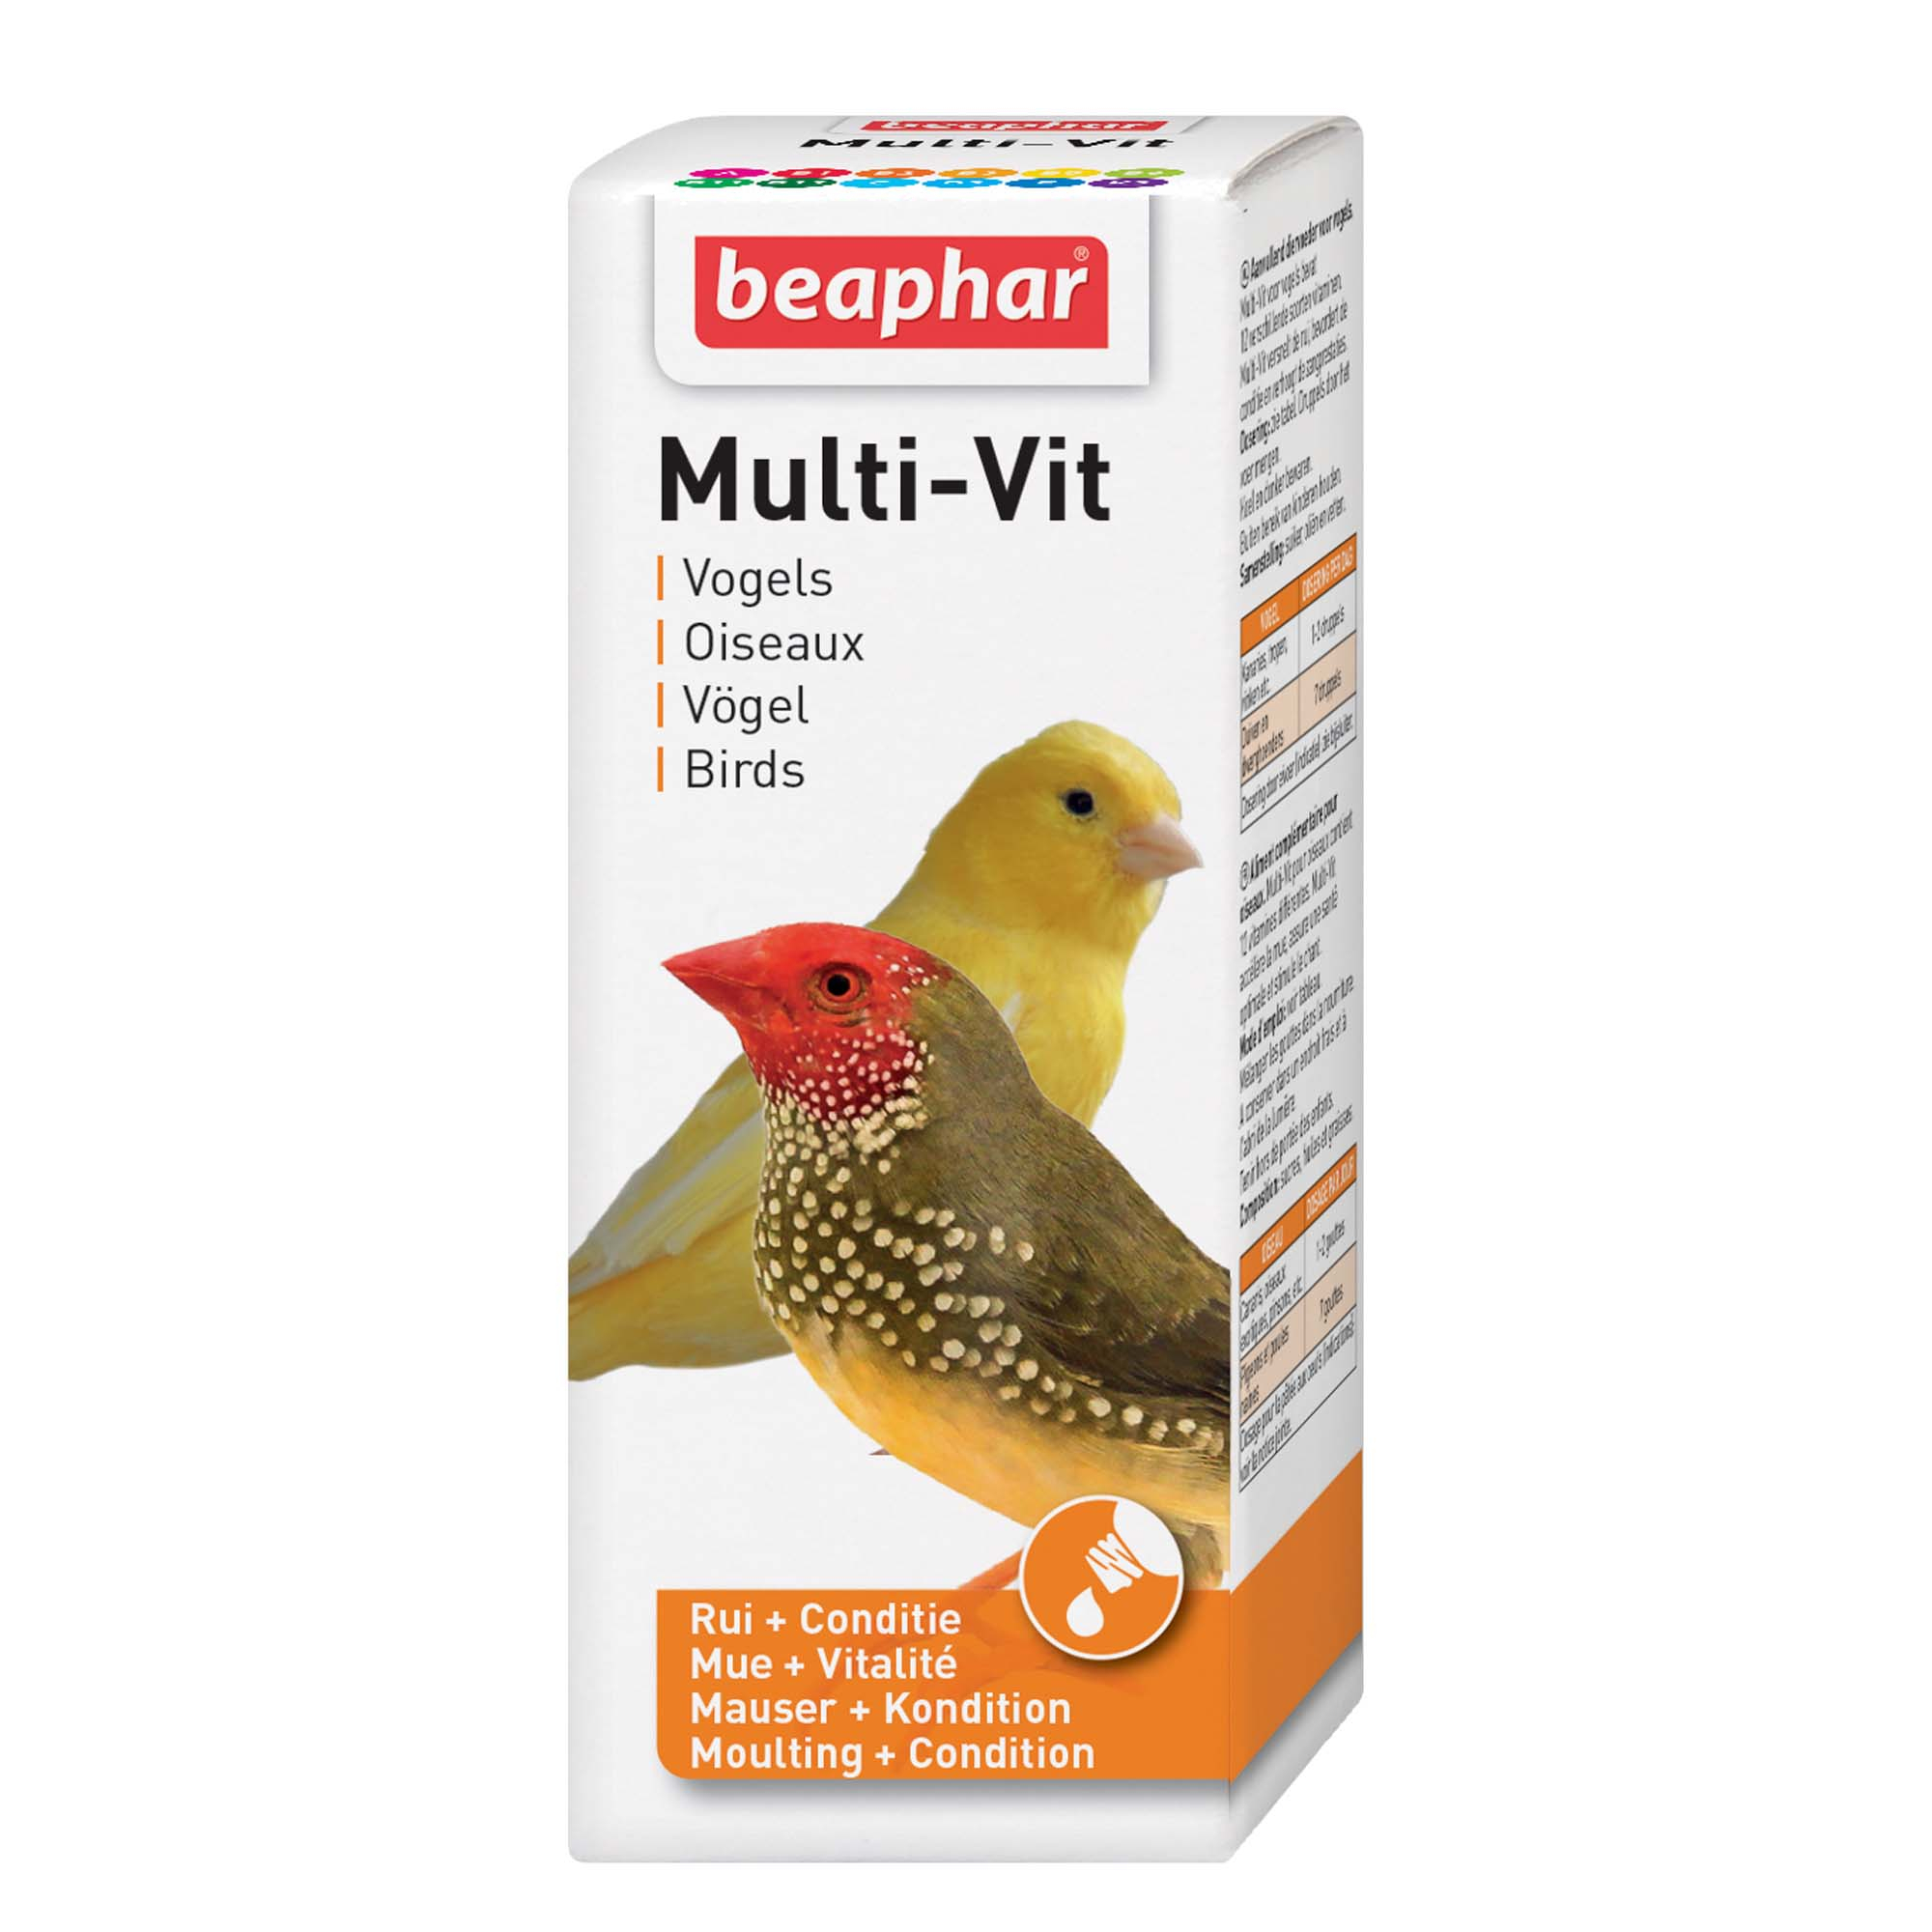 Multi-vit, vitamine per gli uccelli